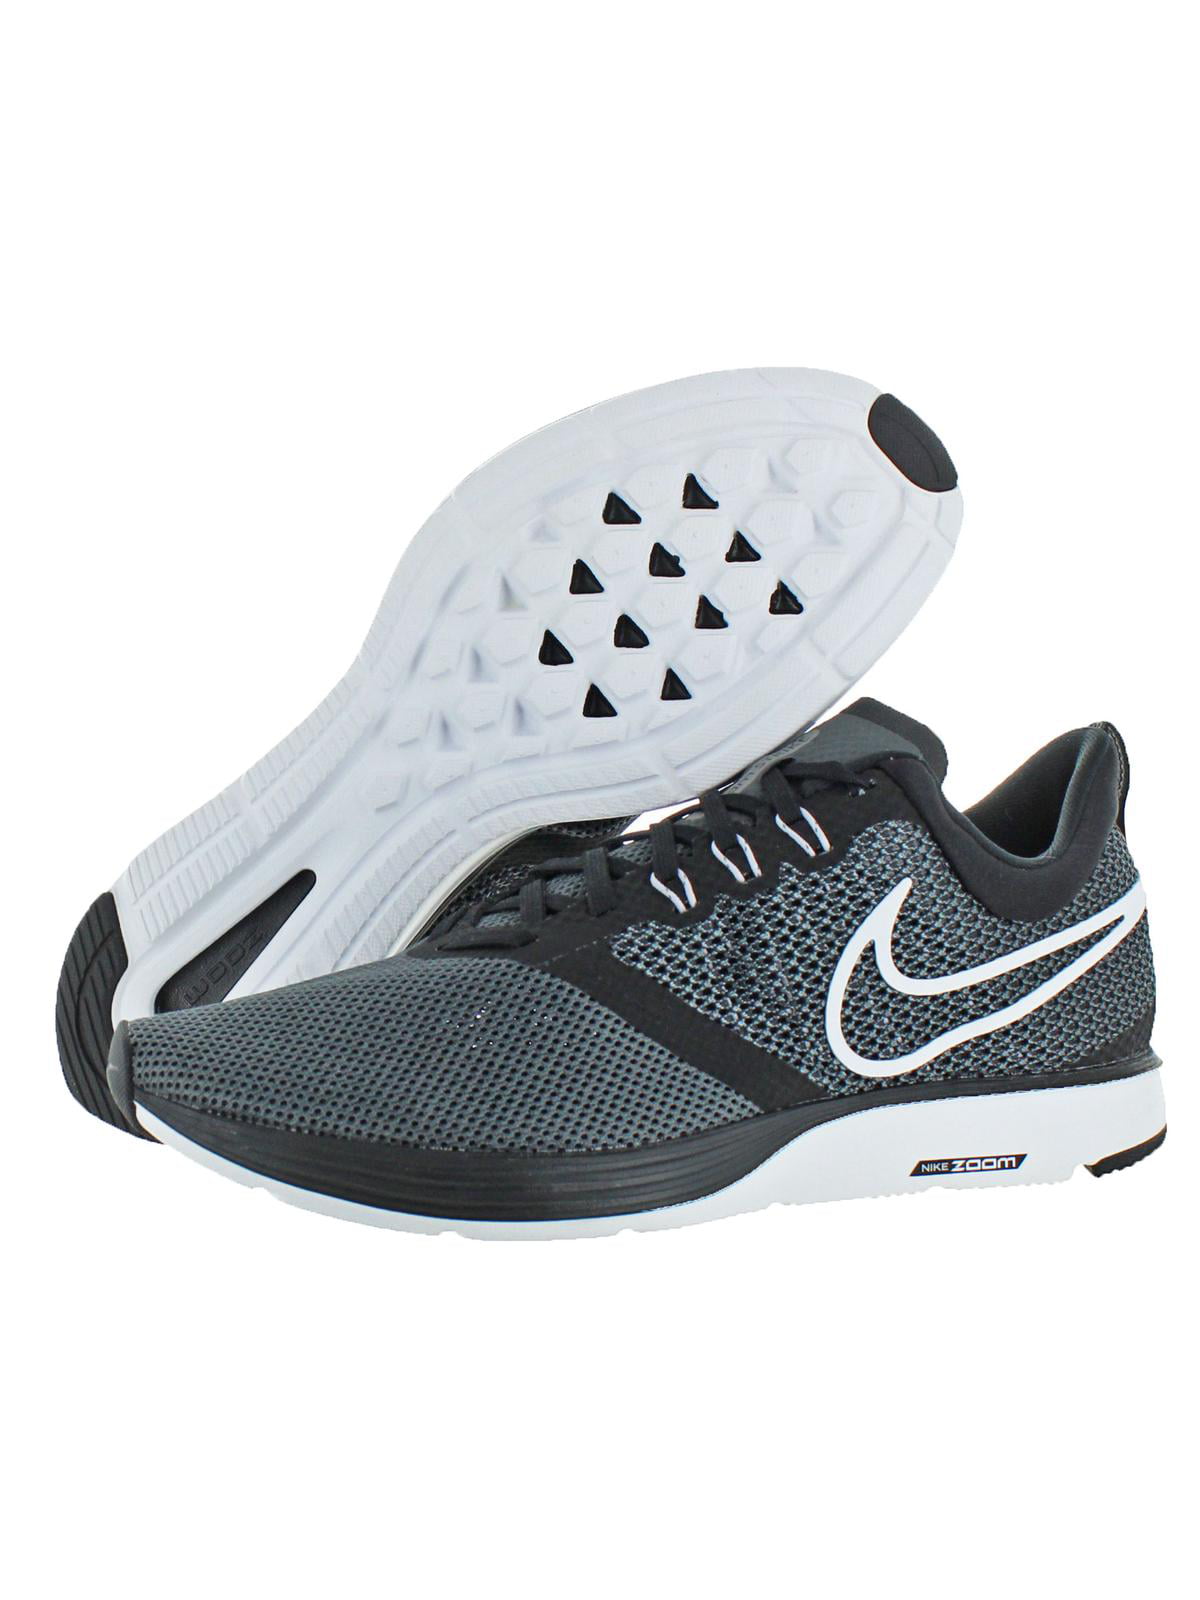 Nike Men's Dark Grey / White - Stealth Black Ankle-High Mesh Shoe 8M - Walmart.com